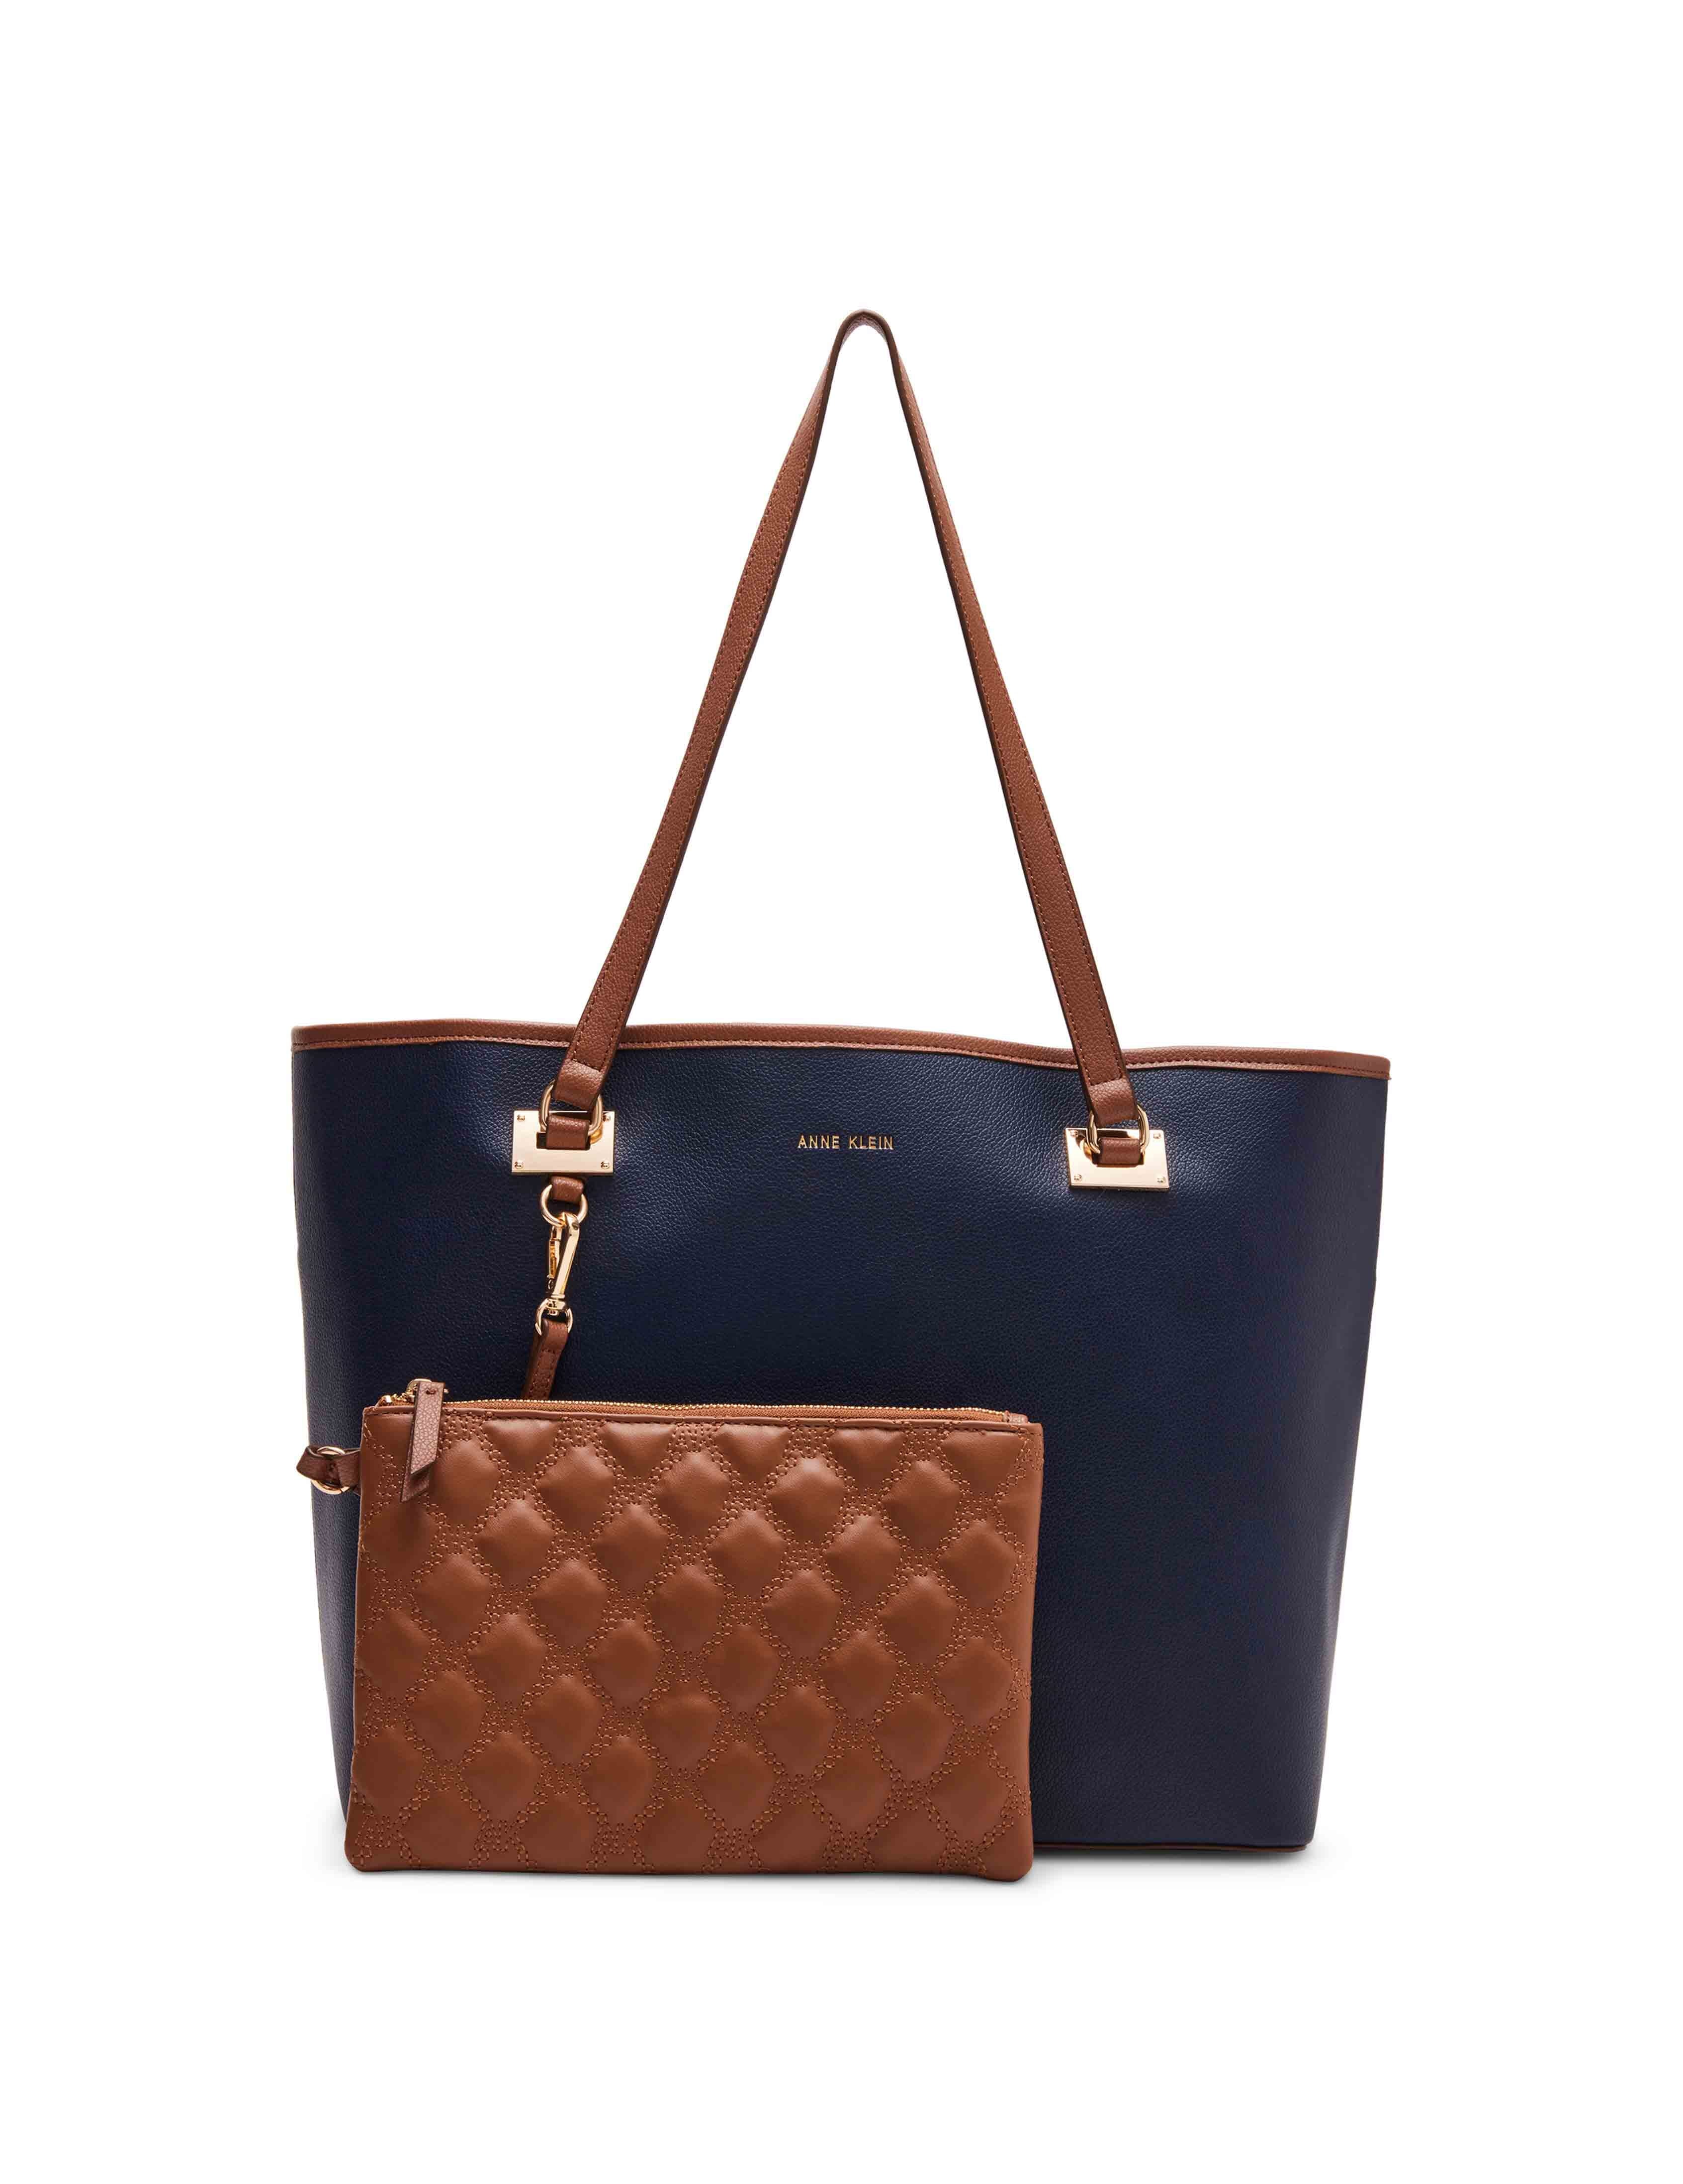 Anne Klein Tote Bags USA - Anne Klein Factory Store Online